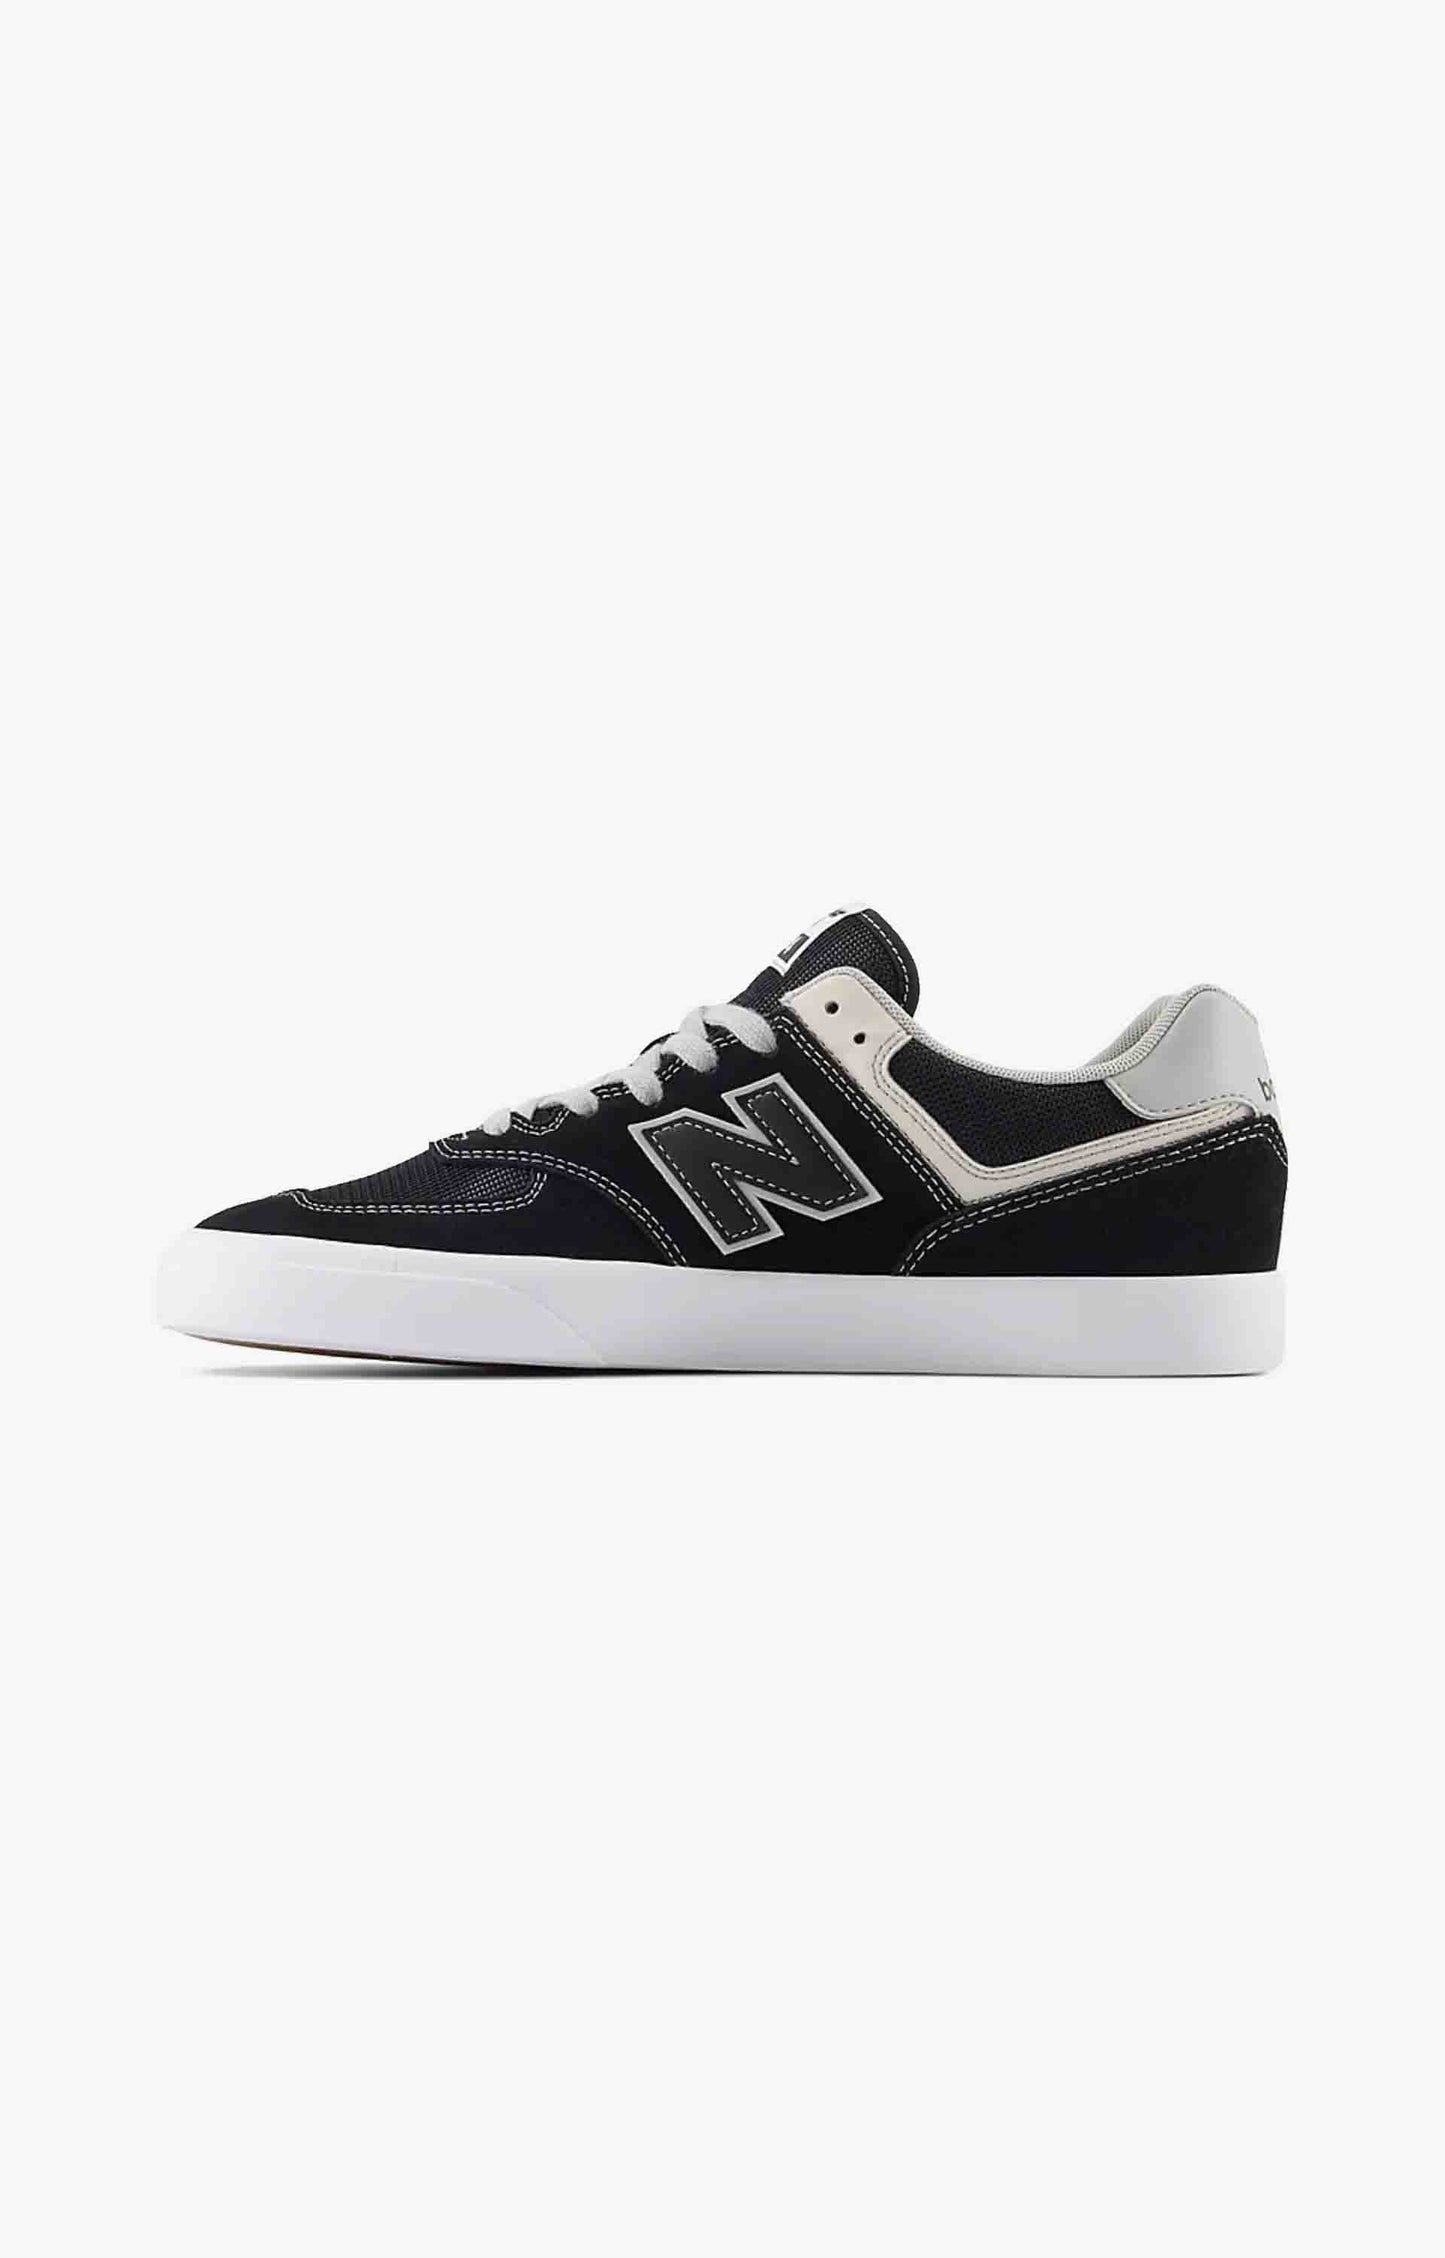 New Balance Numeric NM574VCB Shoe, Black/Grey